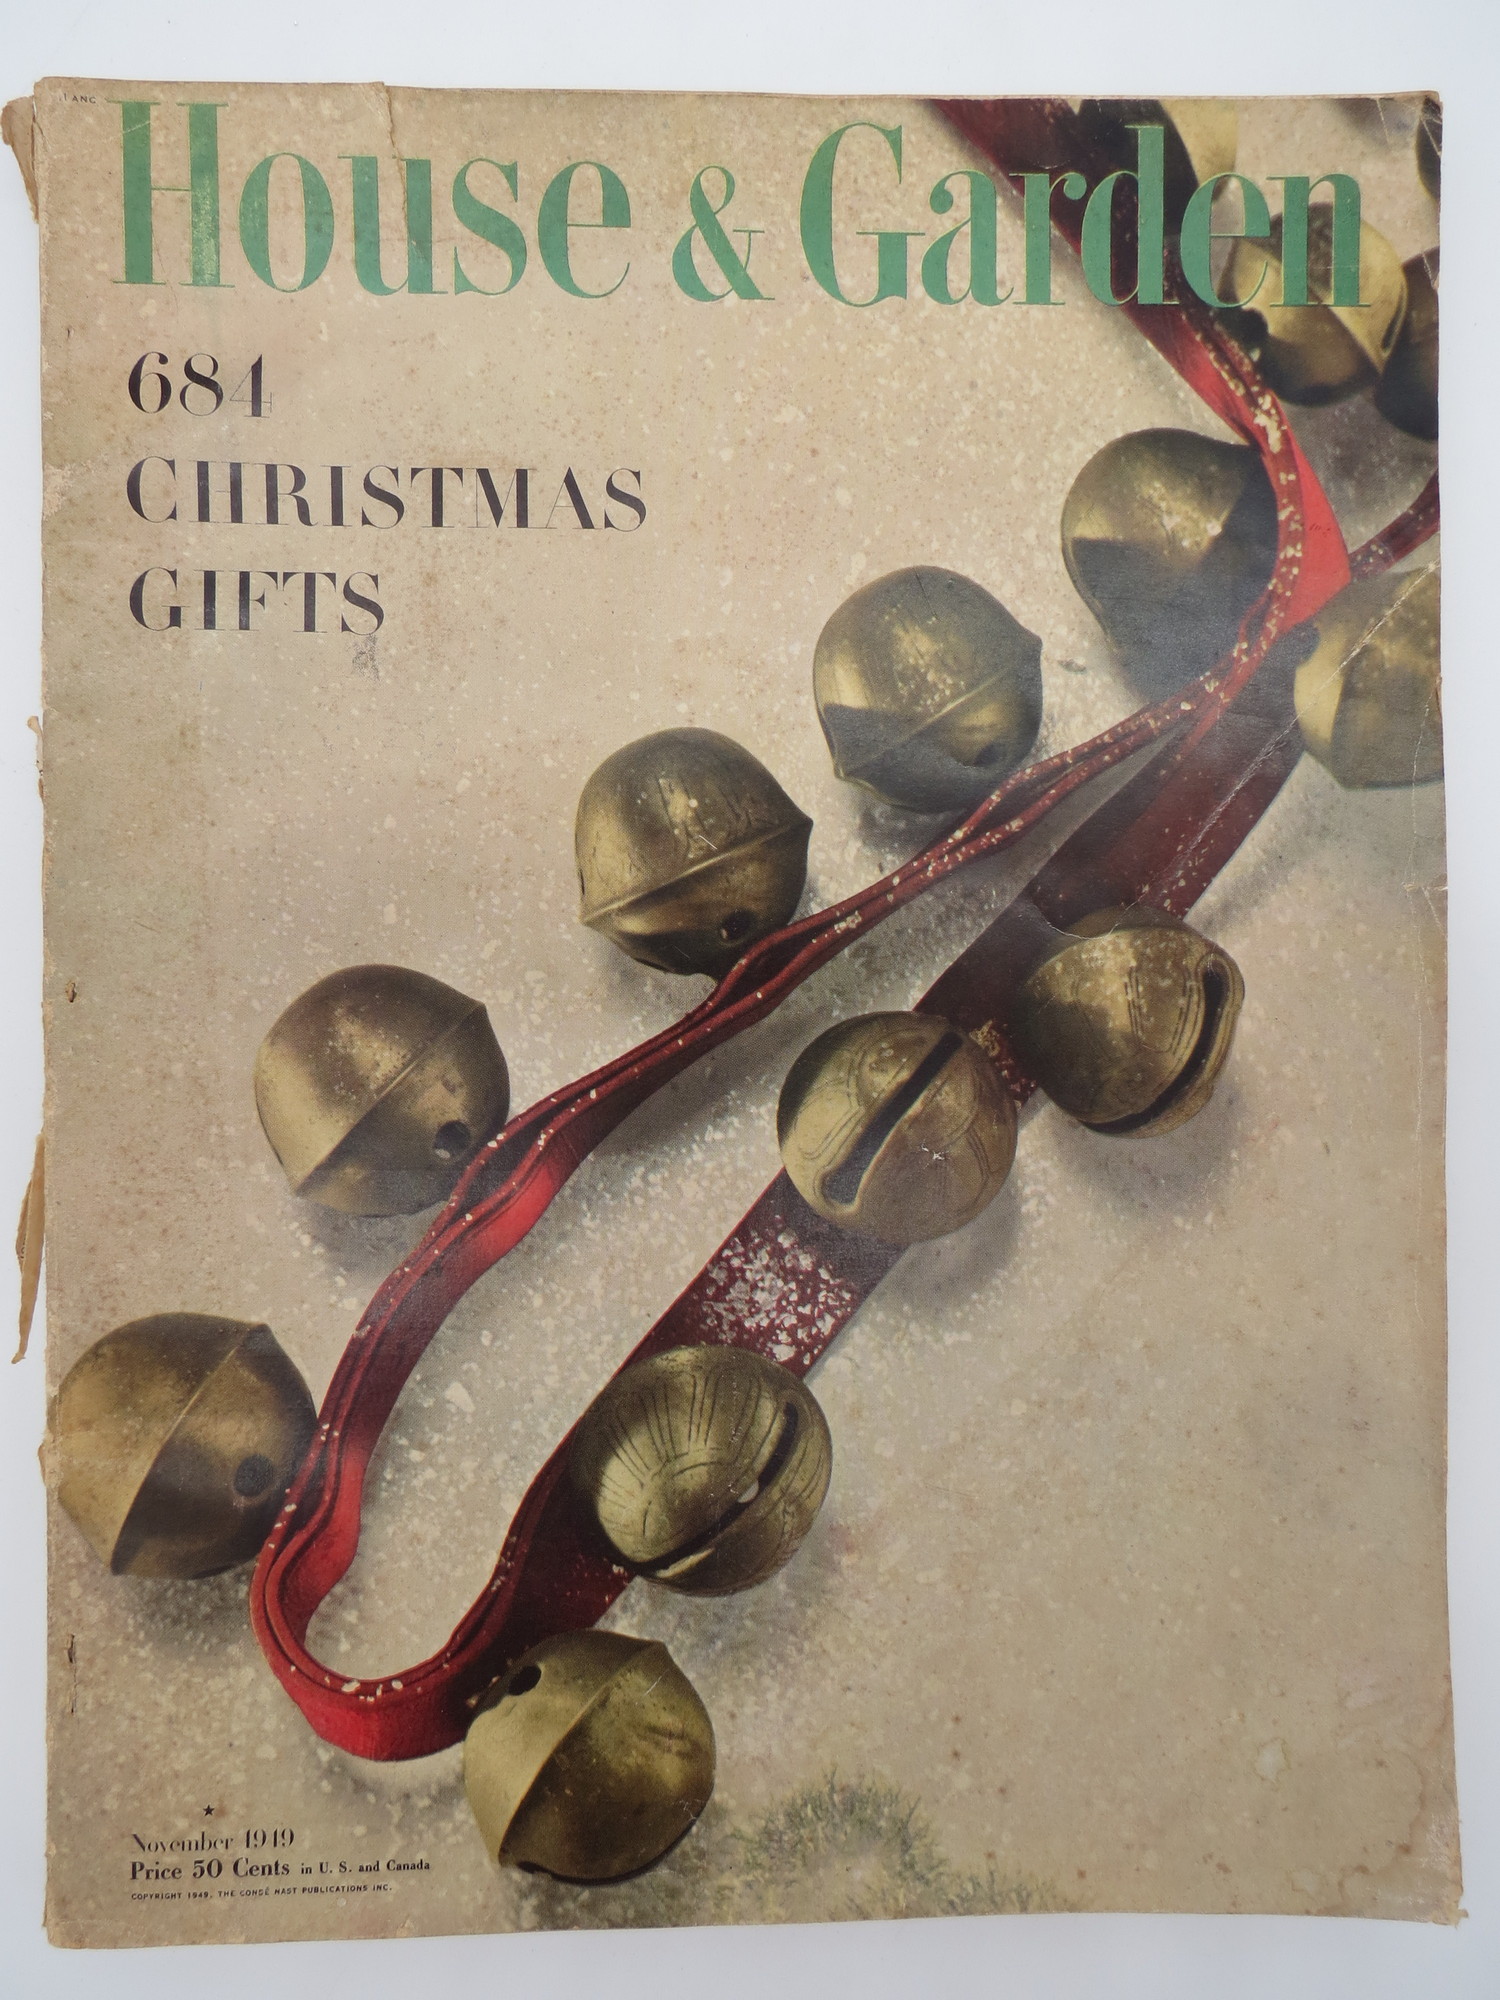 Image for HOUSE & GARDEN MAGAZINE, NOVEMBER 1949 (684 CHRISTMAS GIFTS)